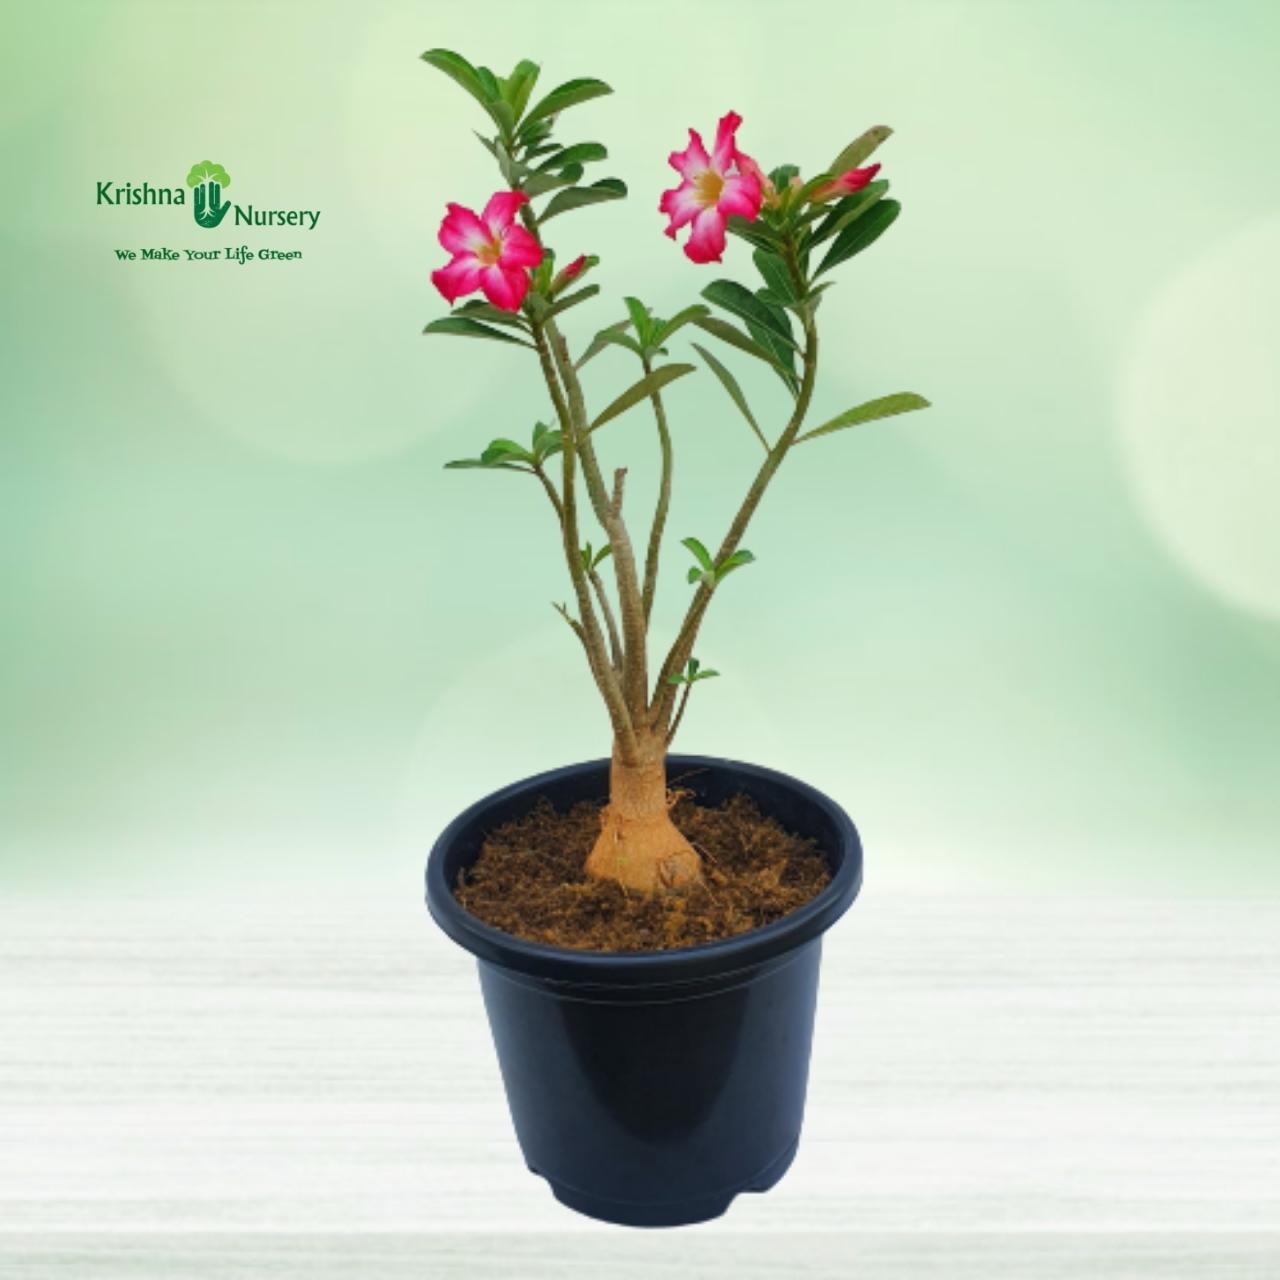 Adenium Plant - Pink Flower - Flower Plants -  - adenium-plant-pink-flower -   